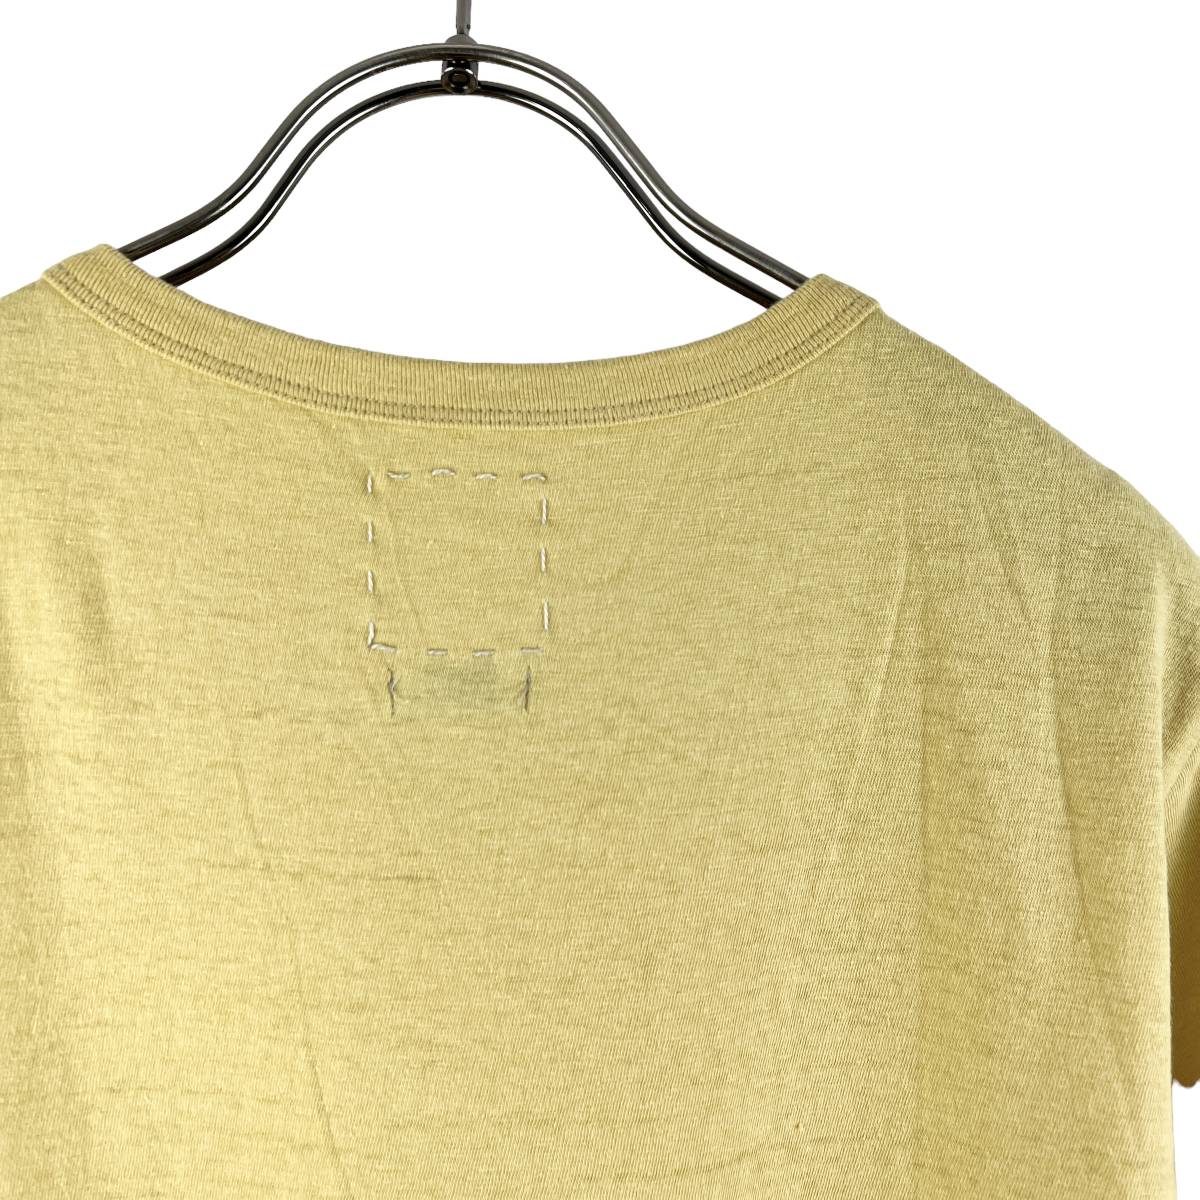 VISVIM(ビズビム) BLACK ELK Suture Design T Shirt (yellow)